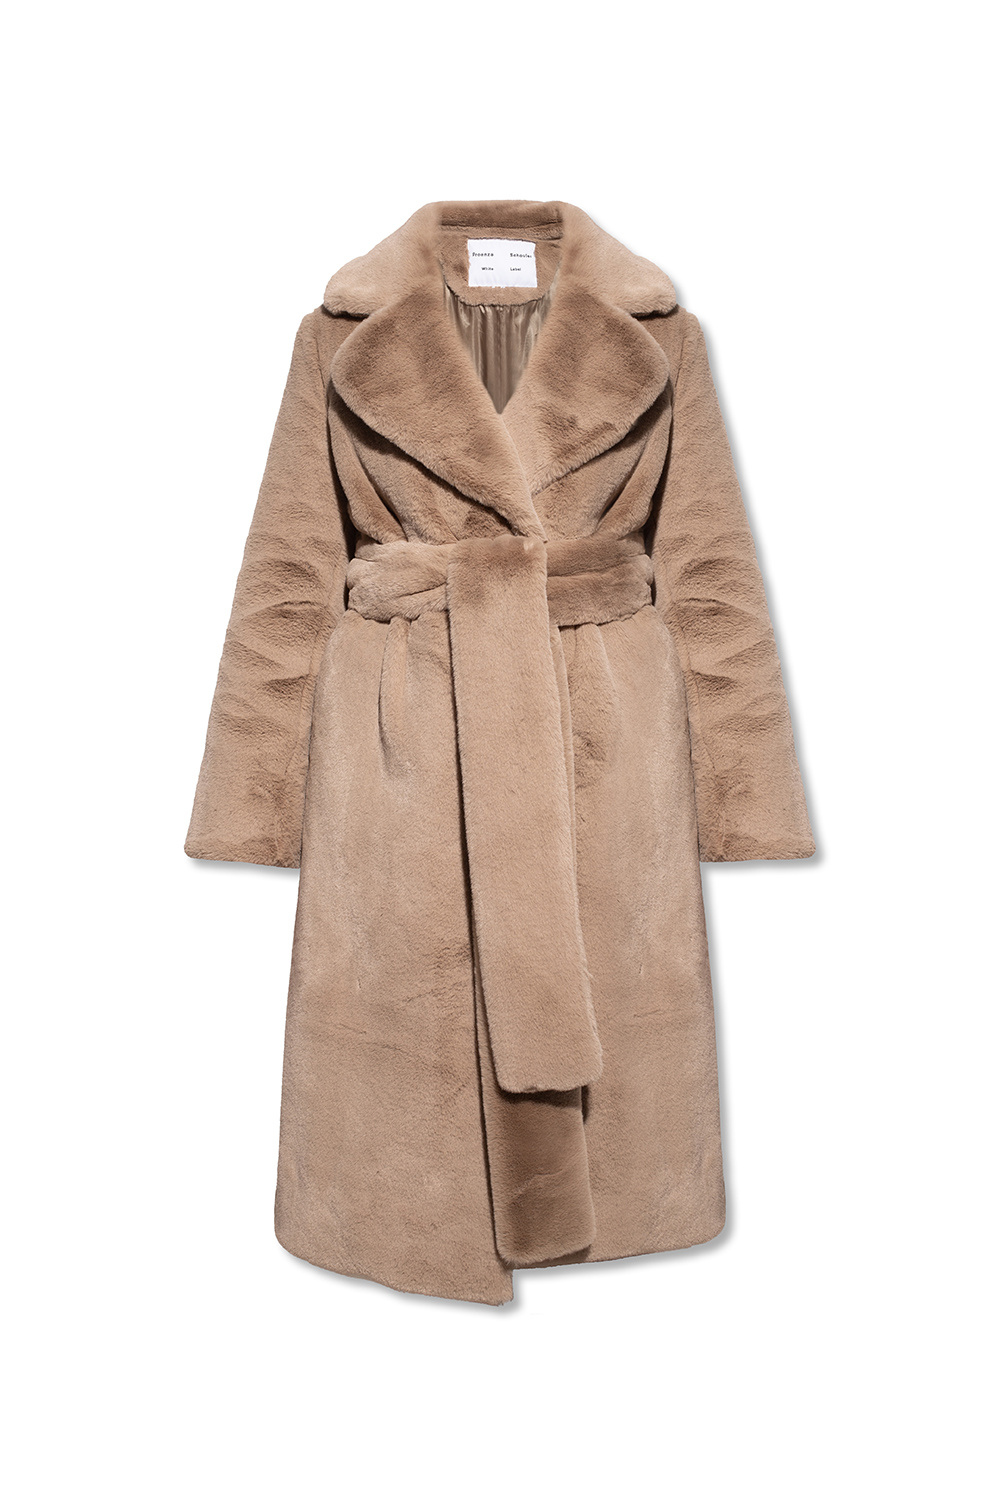 Proenza Schouler White Label Faux fur coat